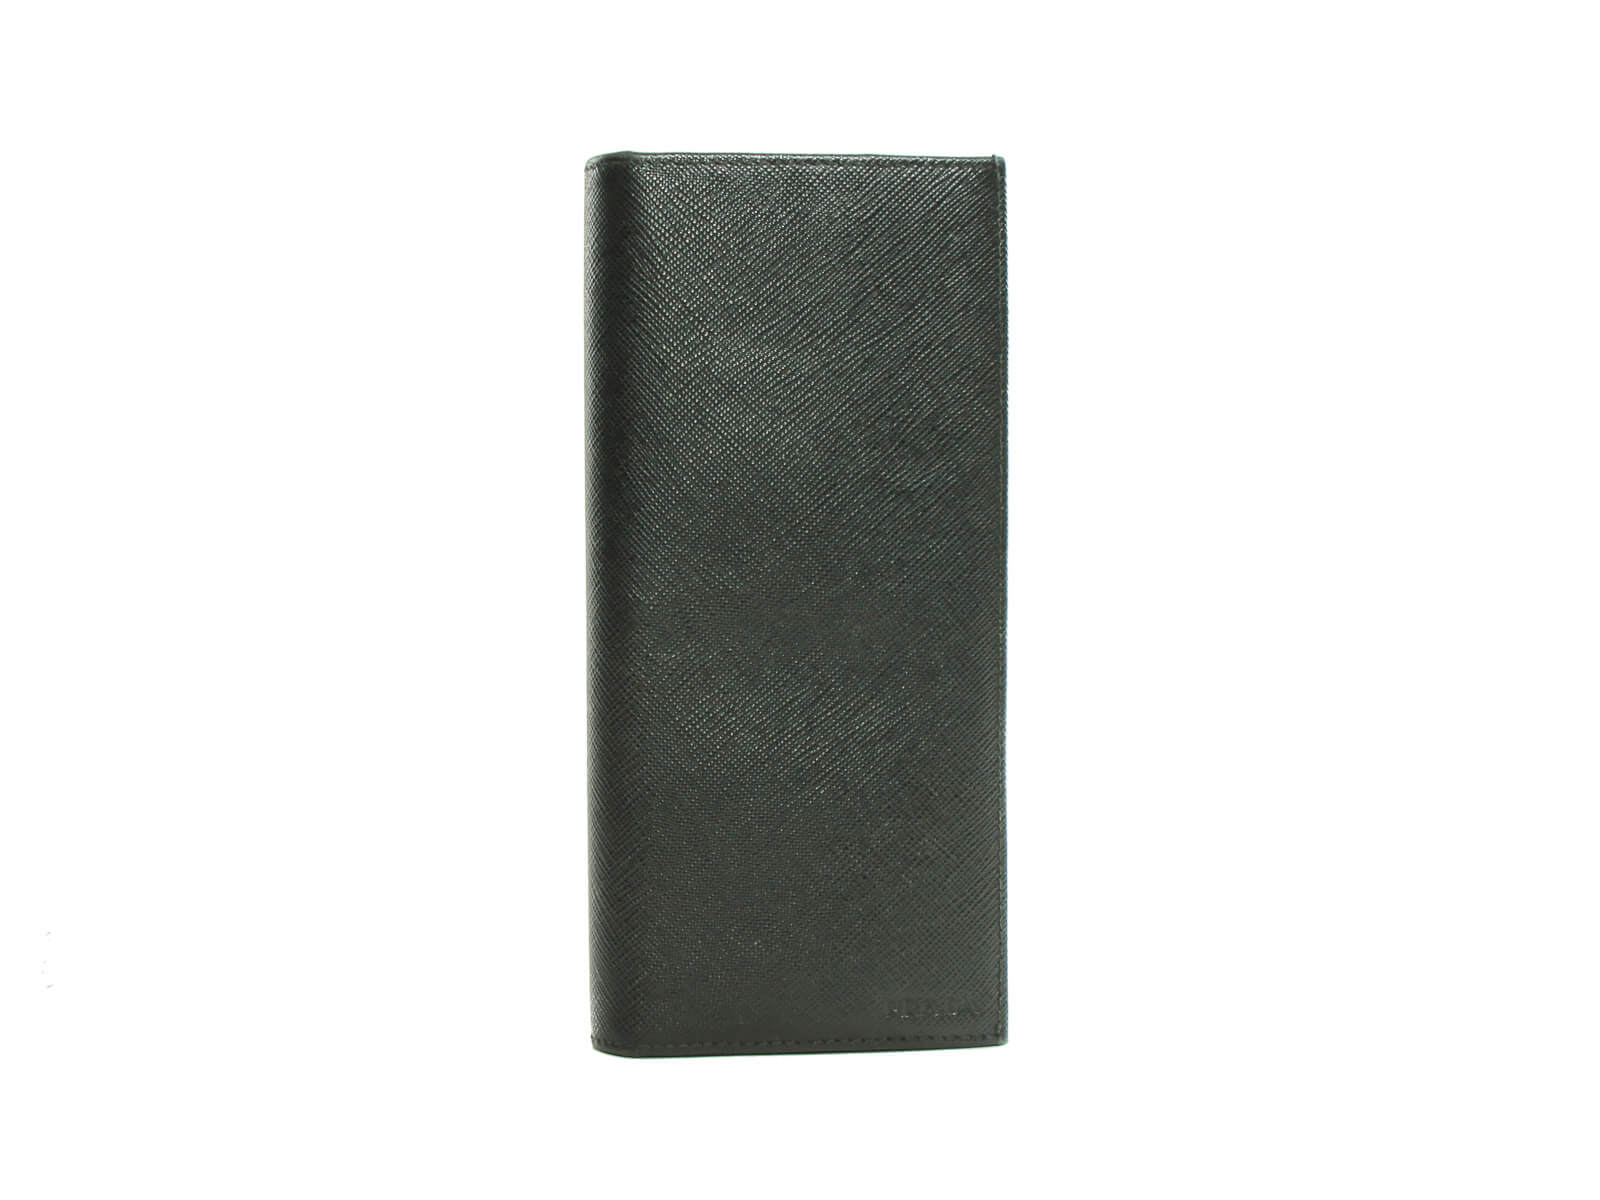 Prada Men's Genuine Black Saffiano Leather Bifold Wallet